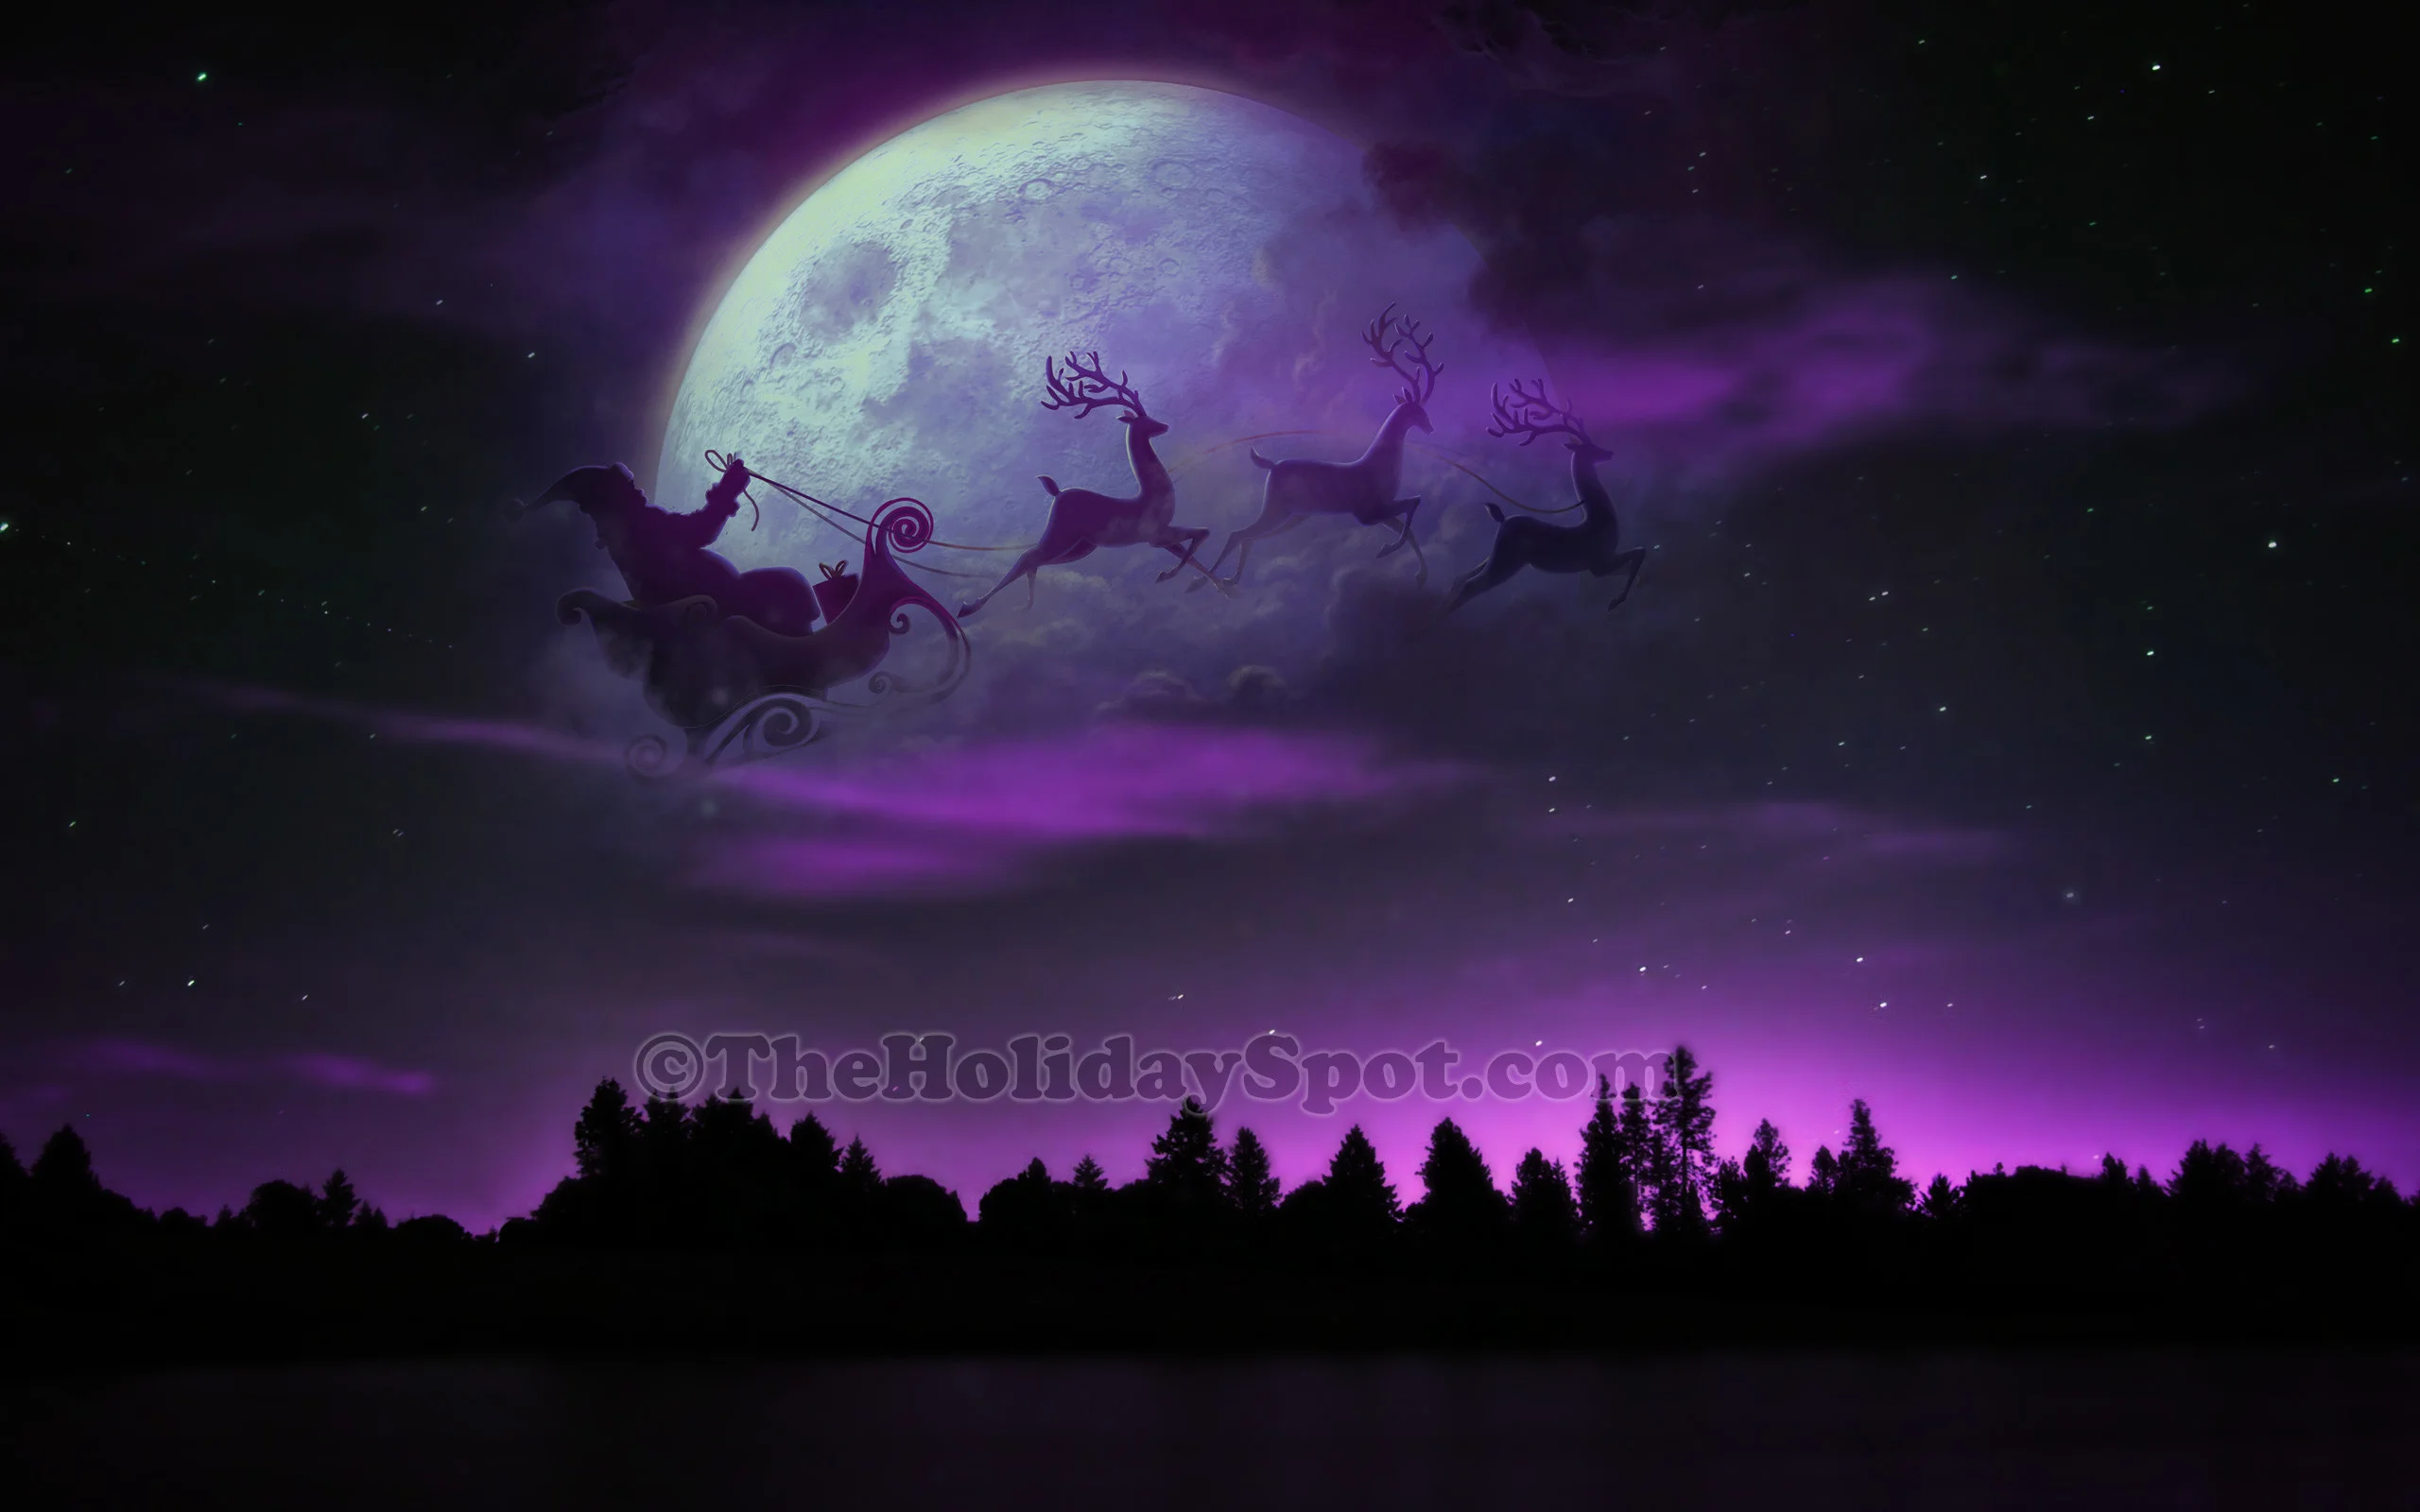 HD Wallpaper – Santa, Sleigh and Reindeer at Christmas Night